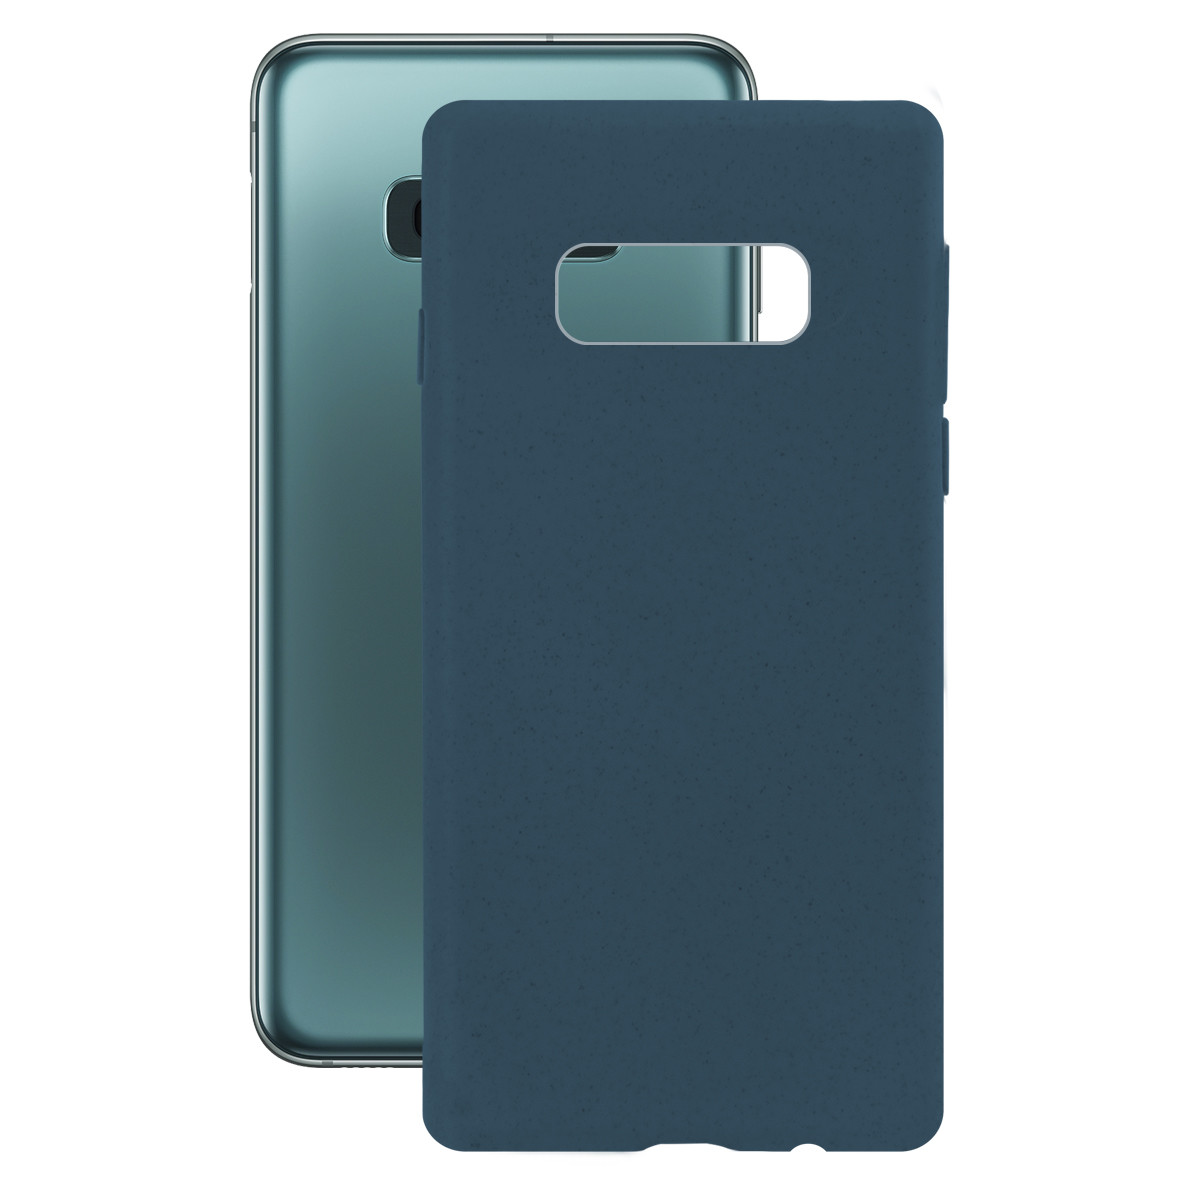 Husa Cover Soft Ksix Eco-Friendly pentru Samsung Galaxy S10e Albastru thumb